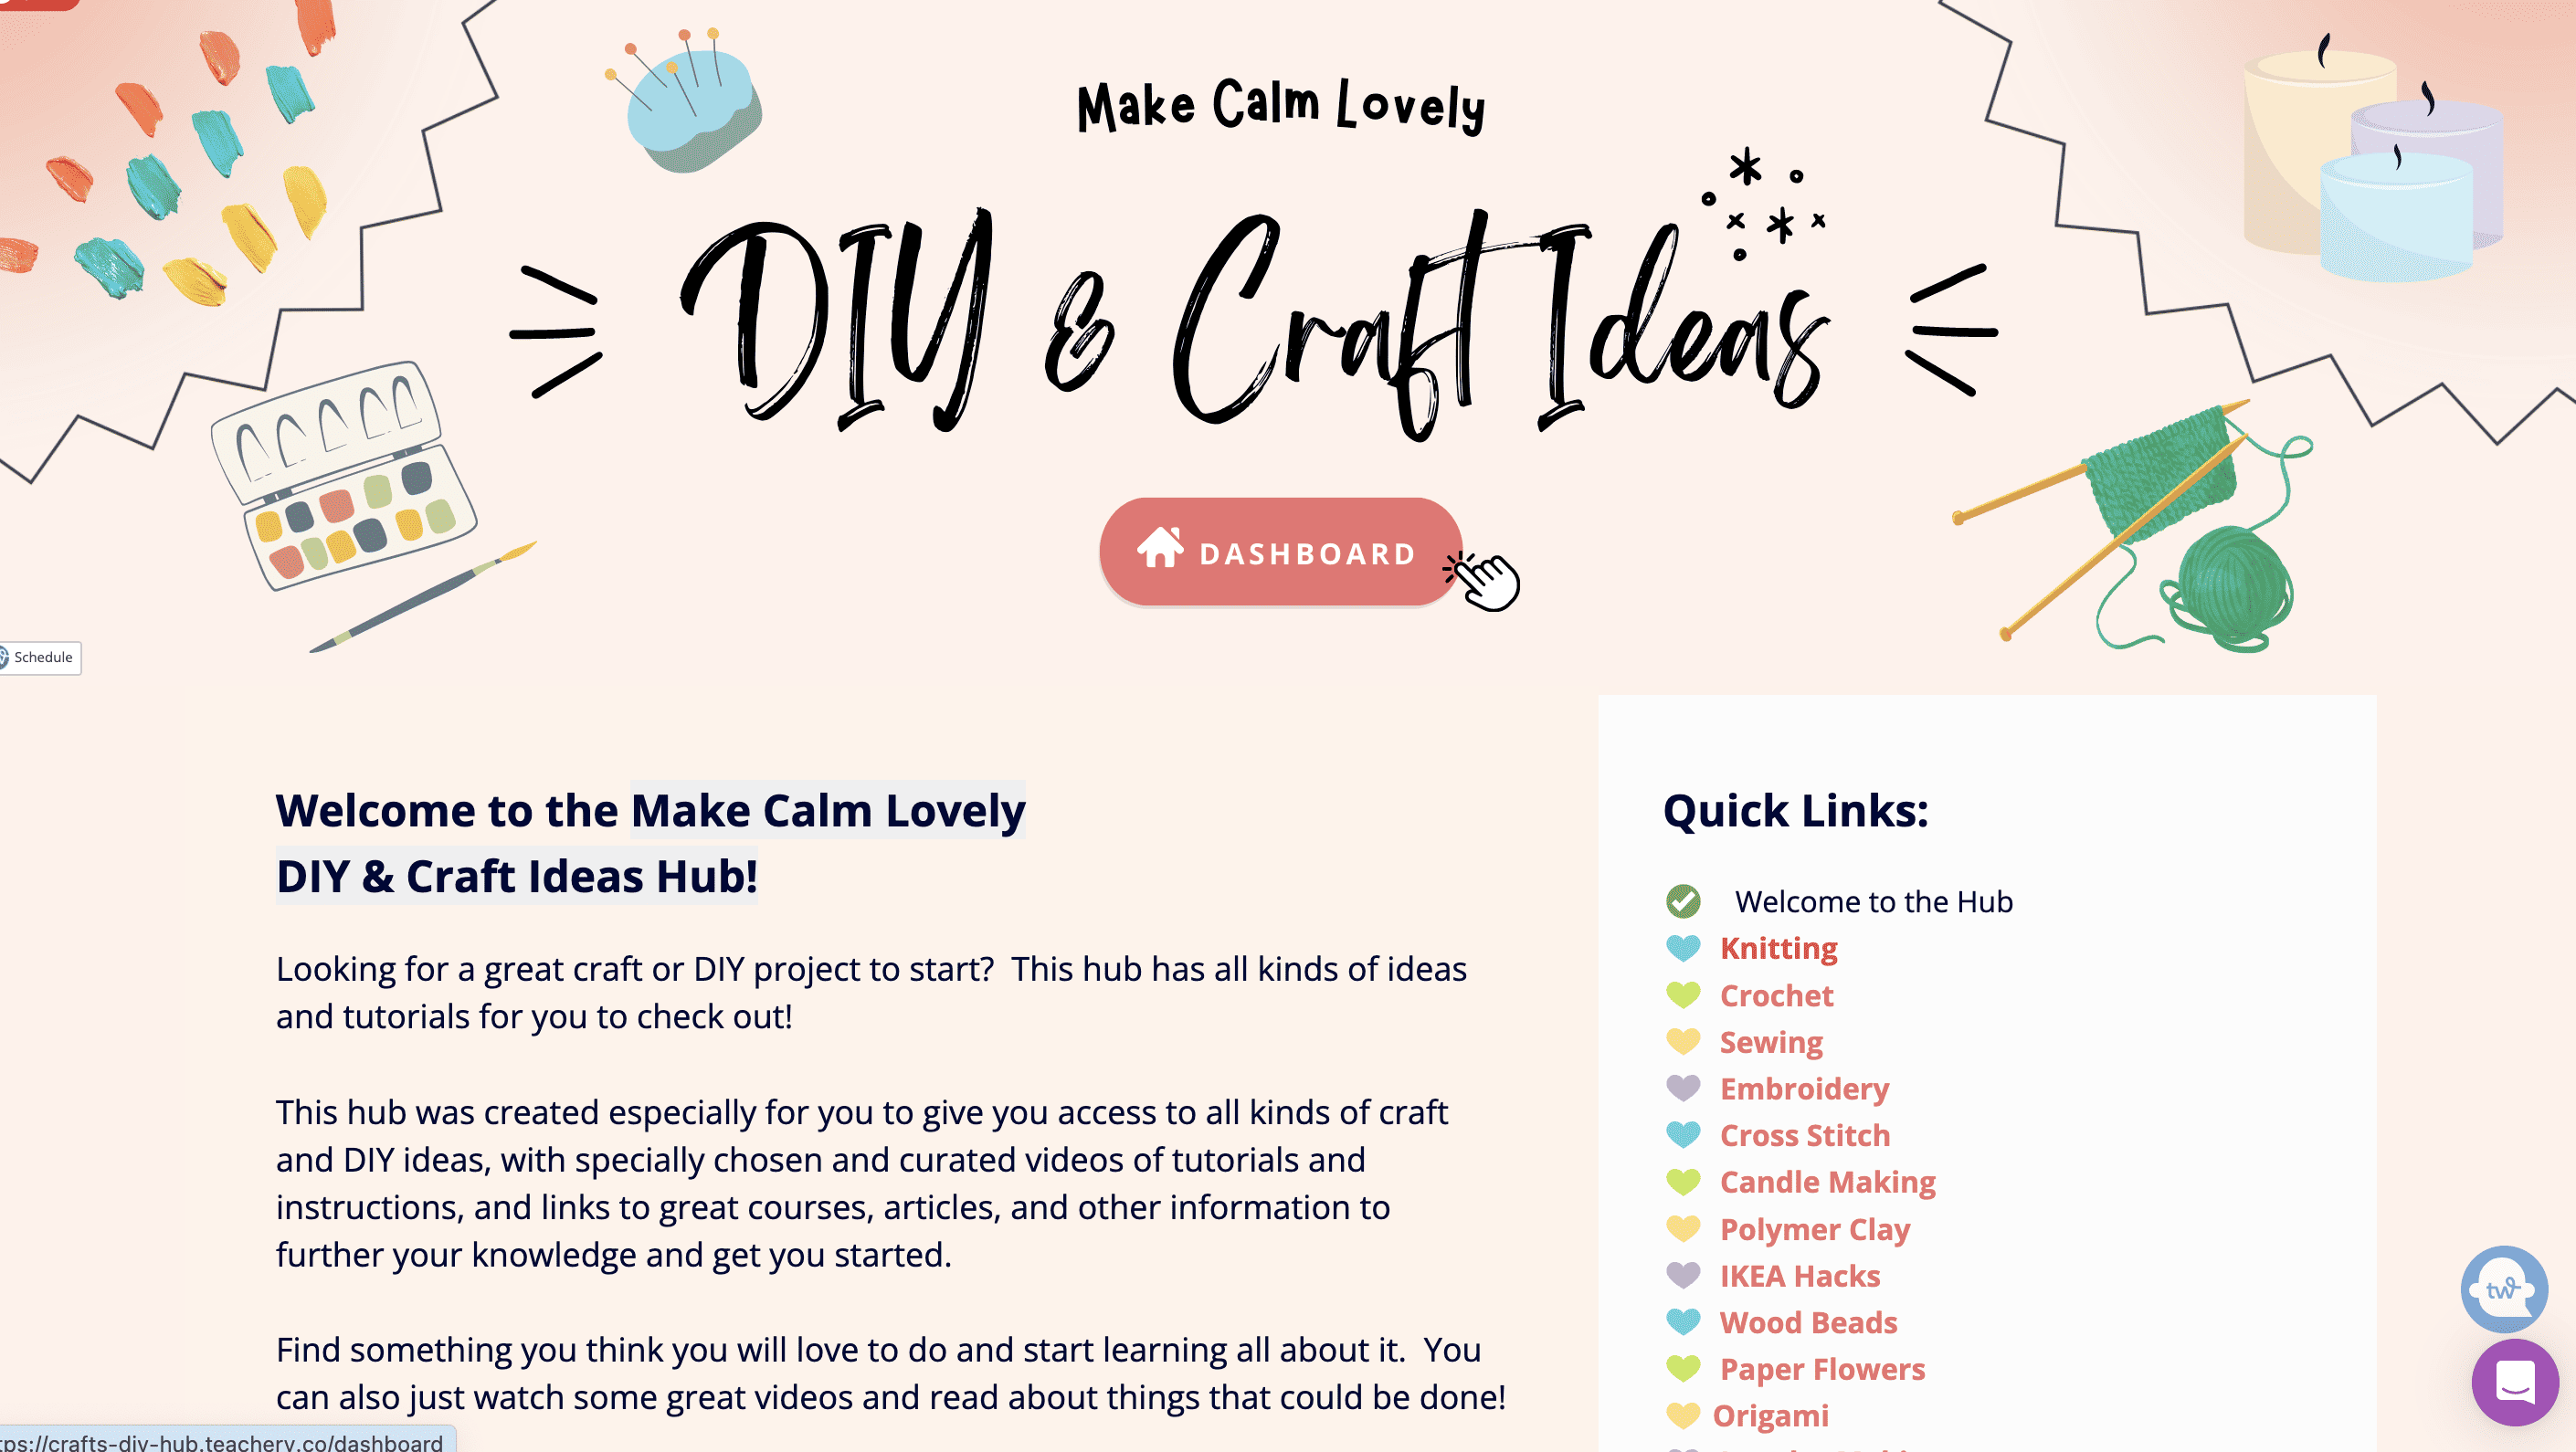 Find a New Craft or DIY Idea in the DIY & Crafts Idea Hub!